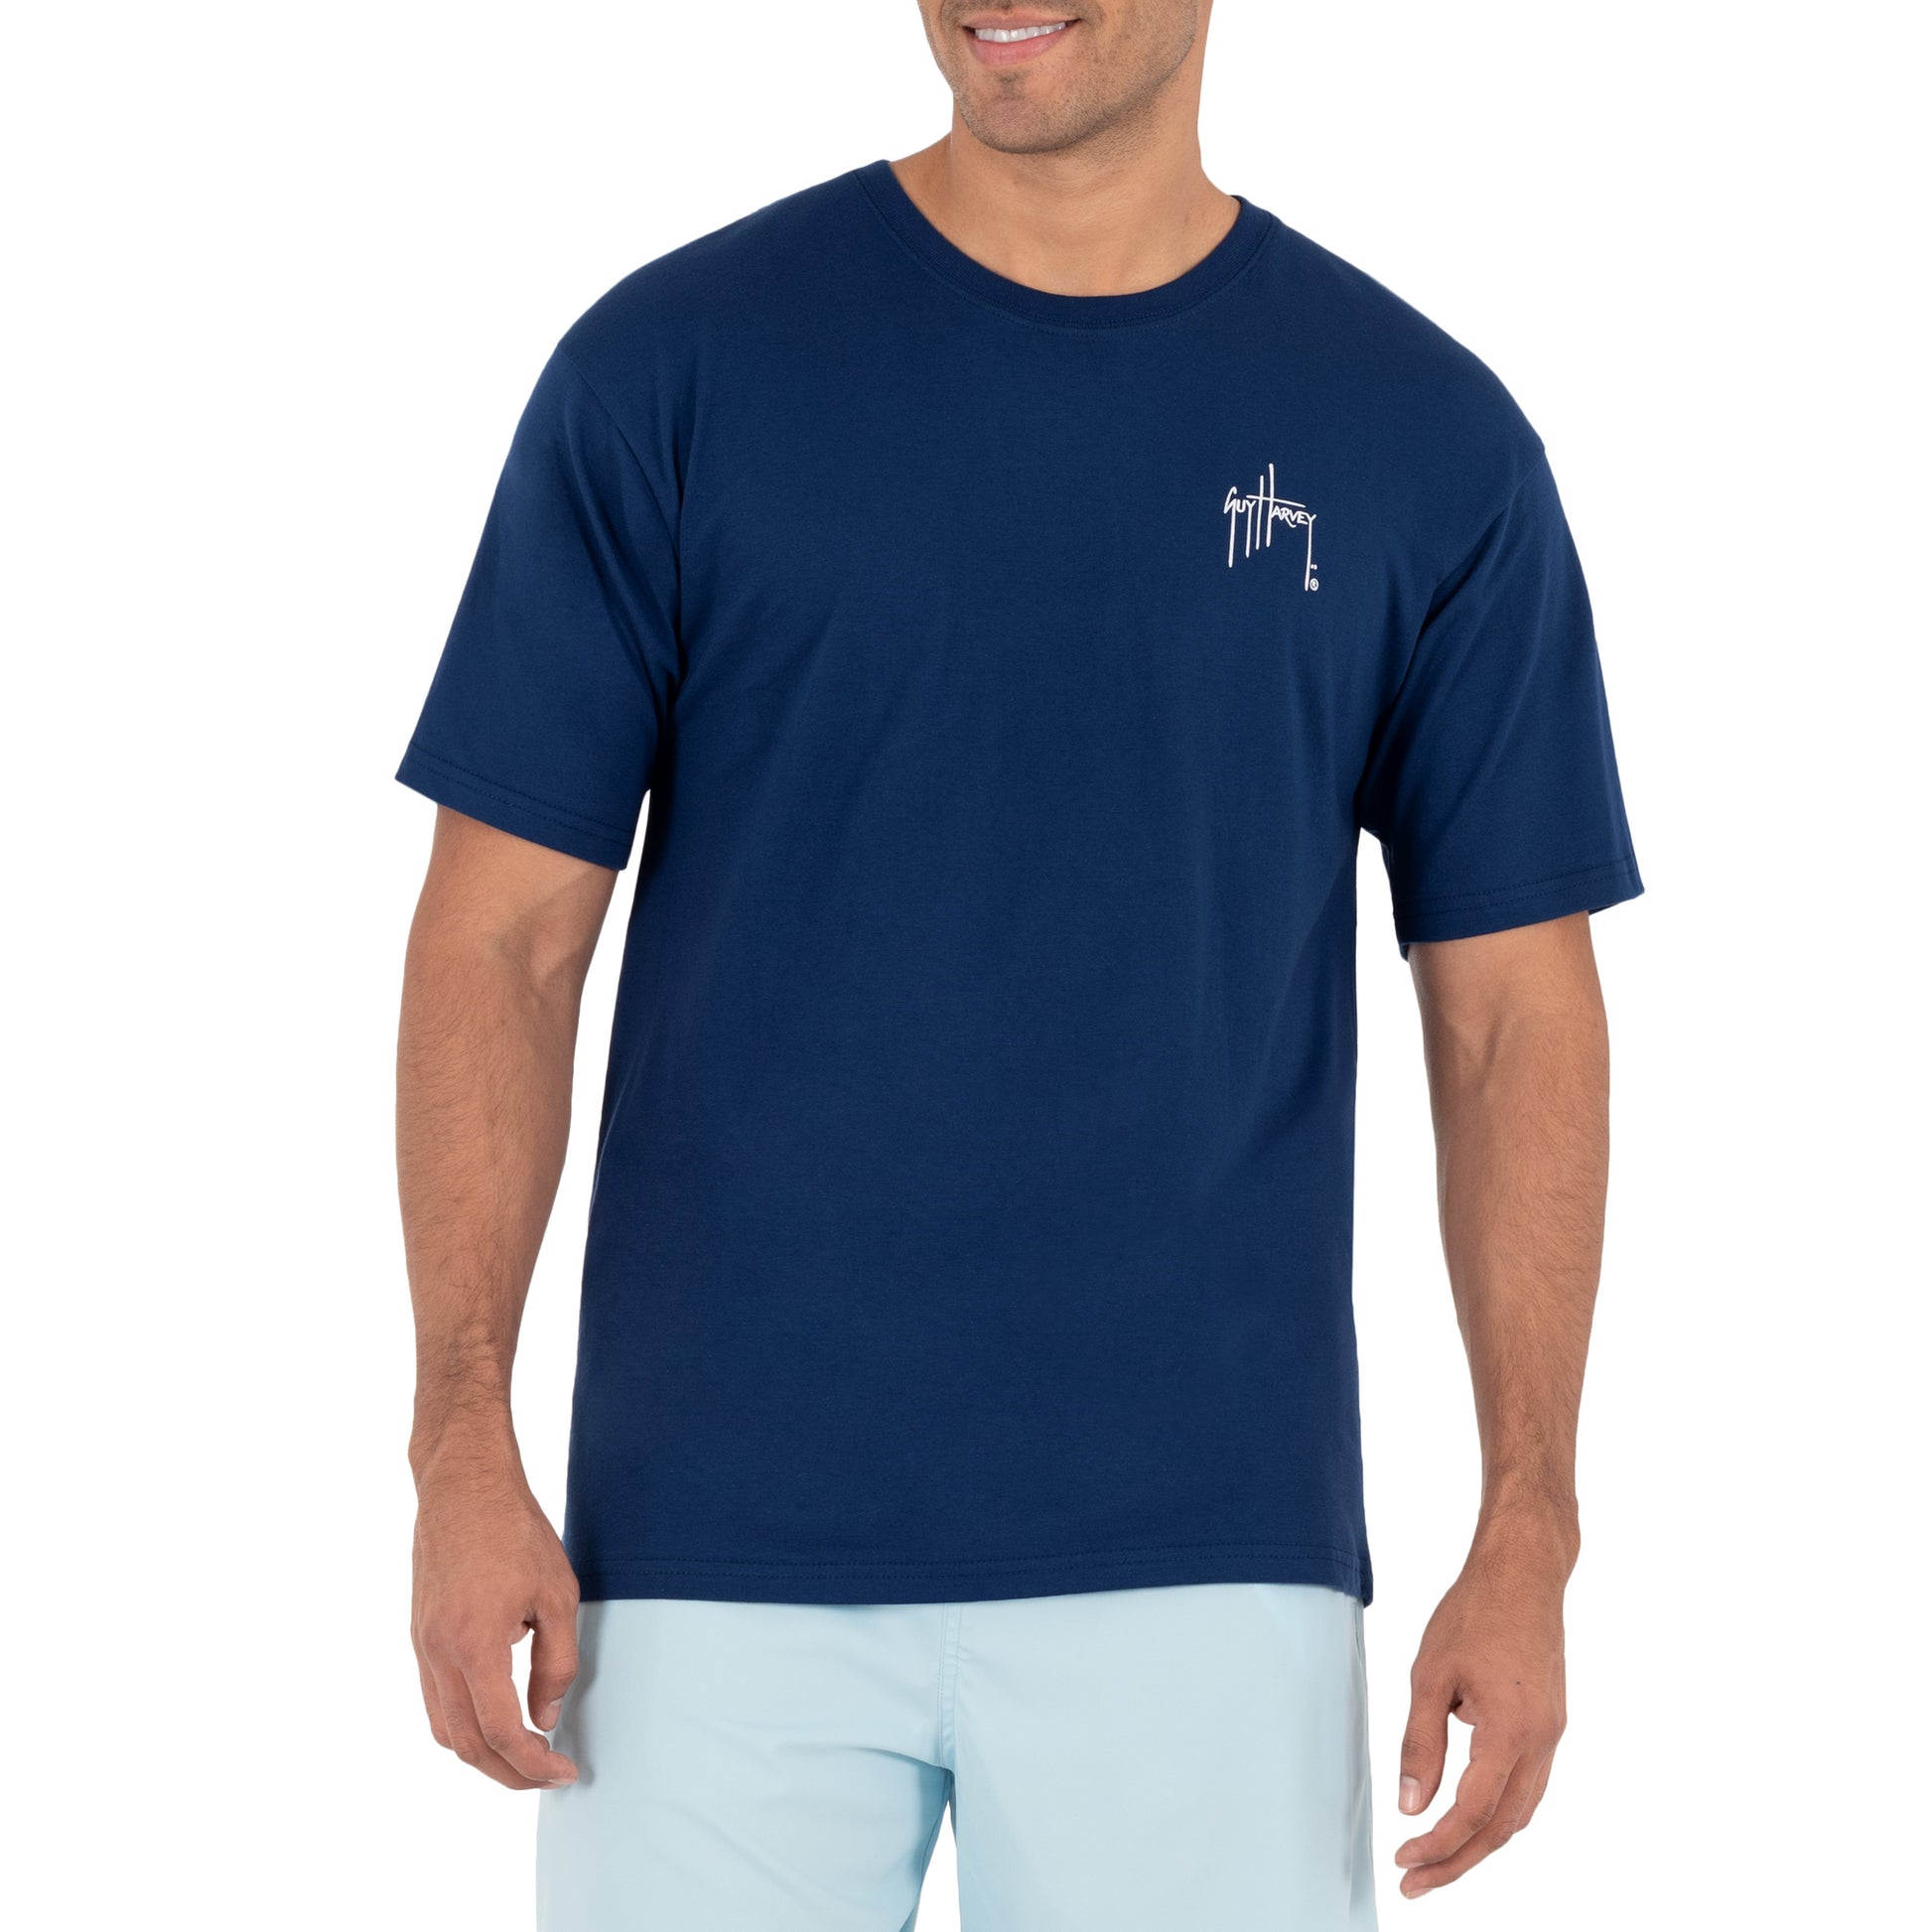 Men's Offshore Haul Tuna Short Sleeve Navy T-Shirt – Guy Harvey